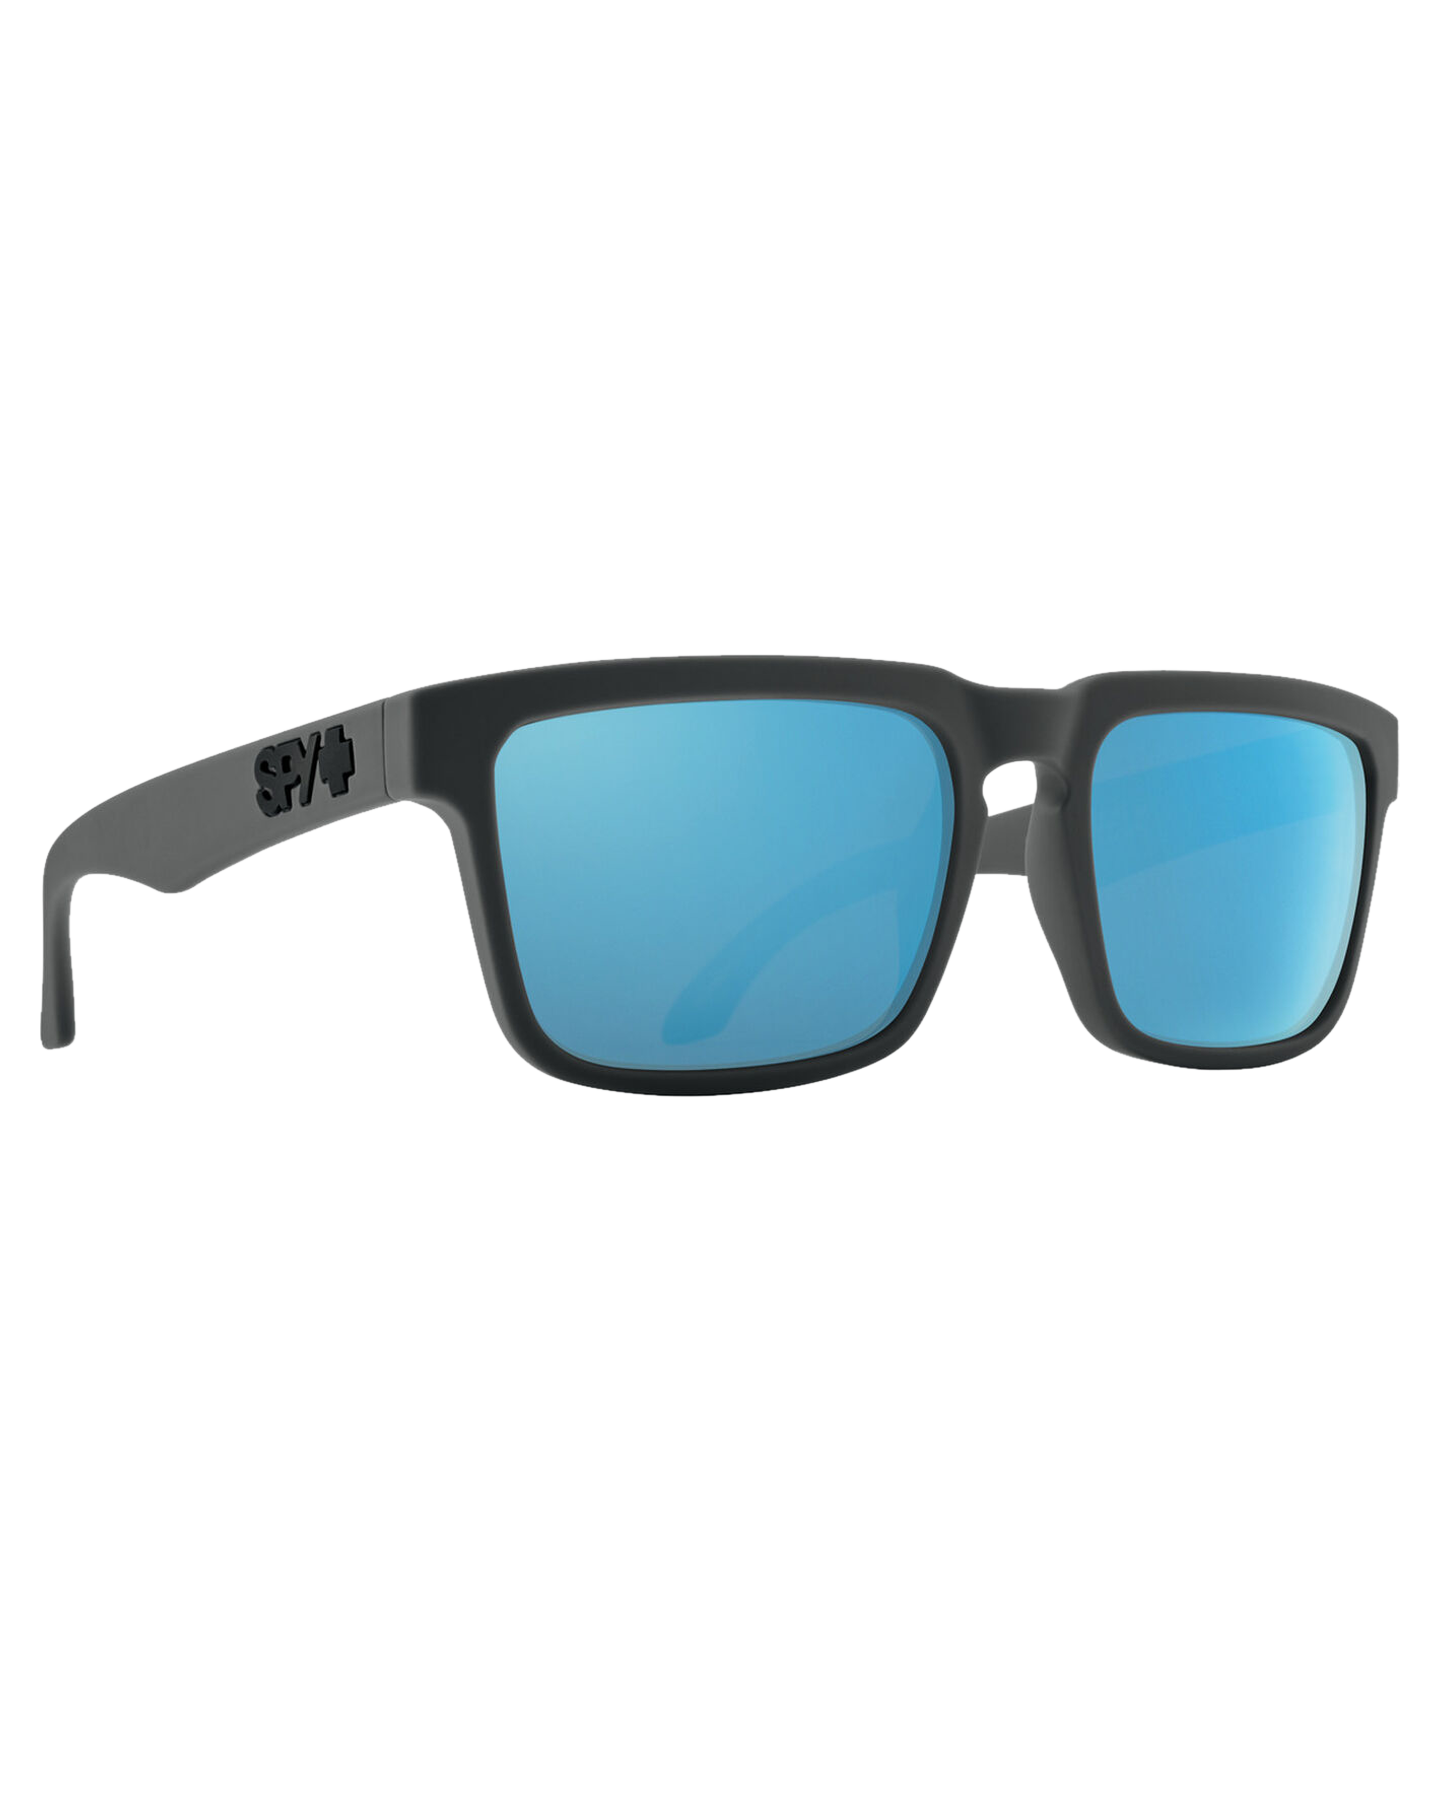 Spy Helm Soft Matte Dark Gray - Happy Gray Green Polar With Light Blue Spectra Mirror Sunglasses - SnowSkiersWarehouse